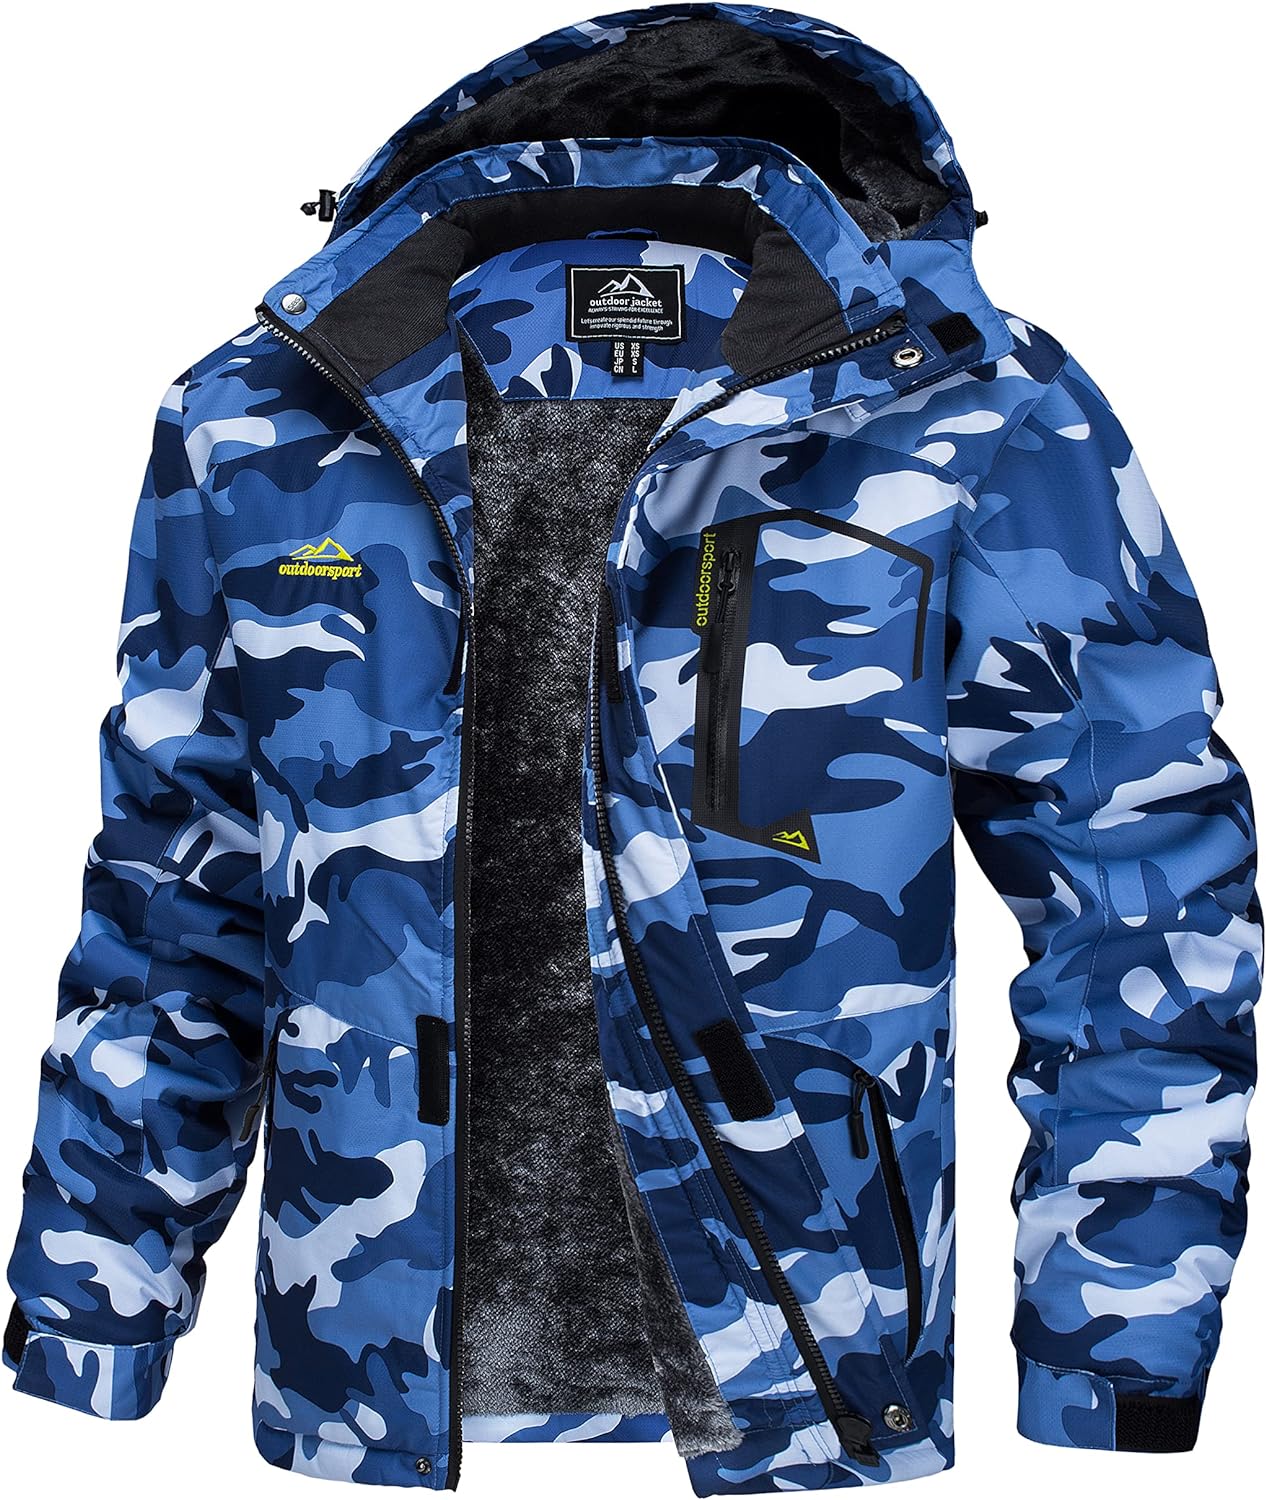  MAGCOMSEN Waterproof Jackets for Men with Hood Fleece Lined  Hiking Jacket Outwear Winter Jacket Warm Jacket Snowboarding Jacket Ski  Jacket : Clothing, Shoes & Jewelry